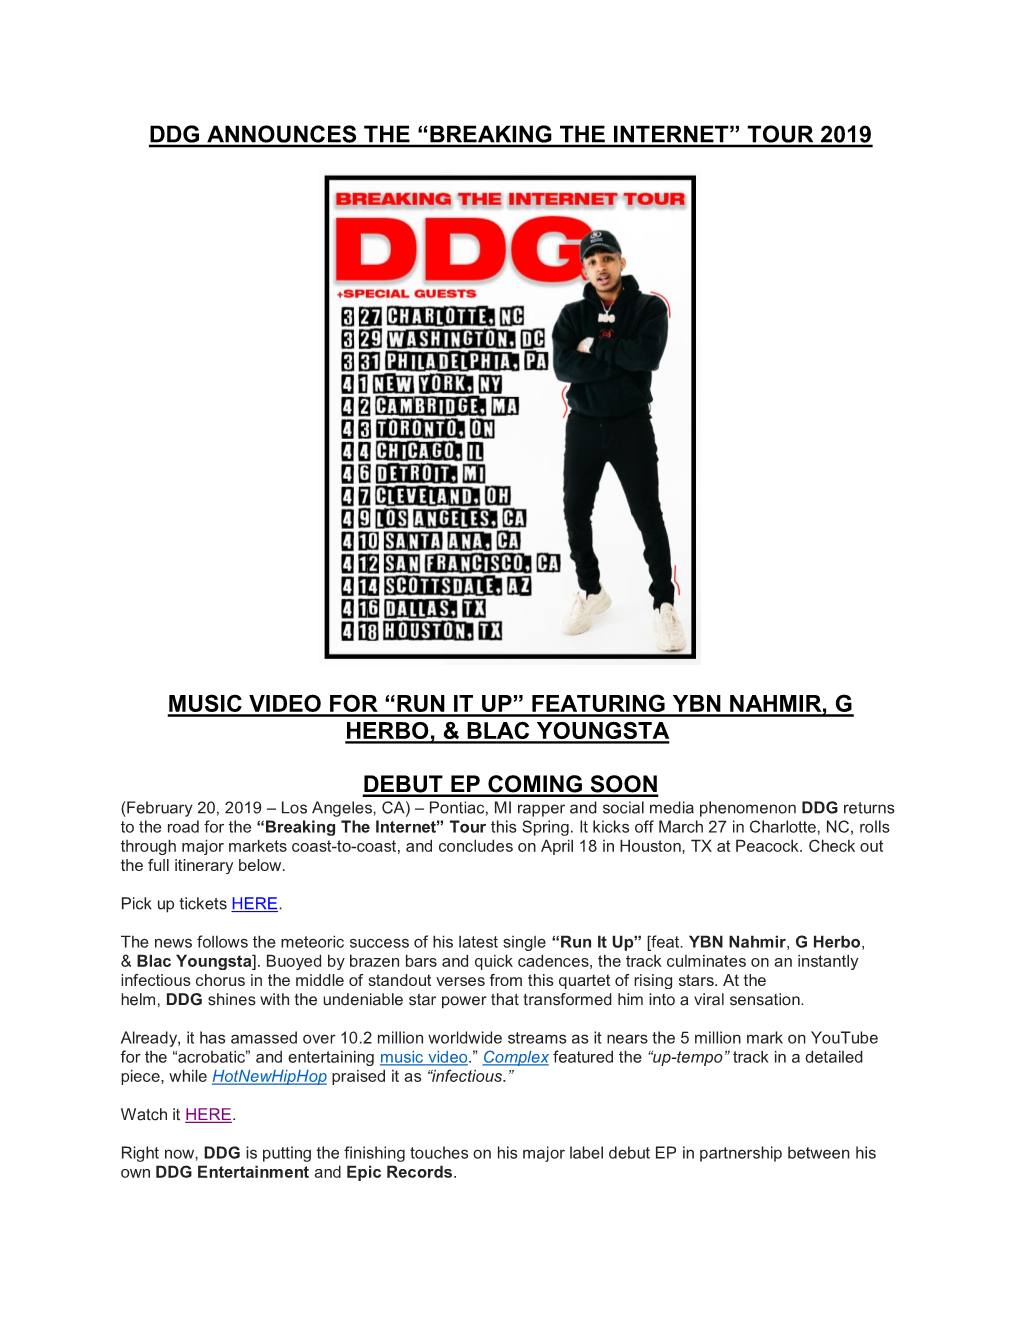 Ddg Announces the “Breaking the Internet” Tour 2019